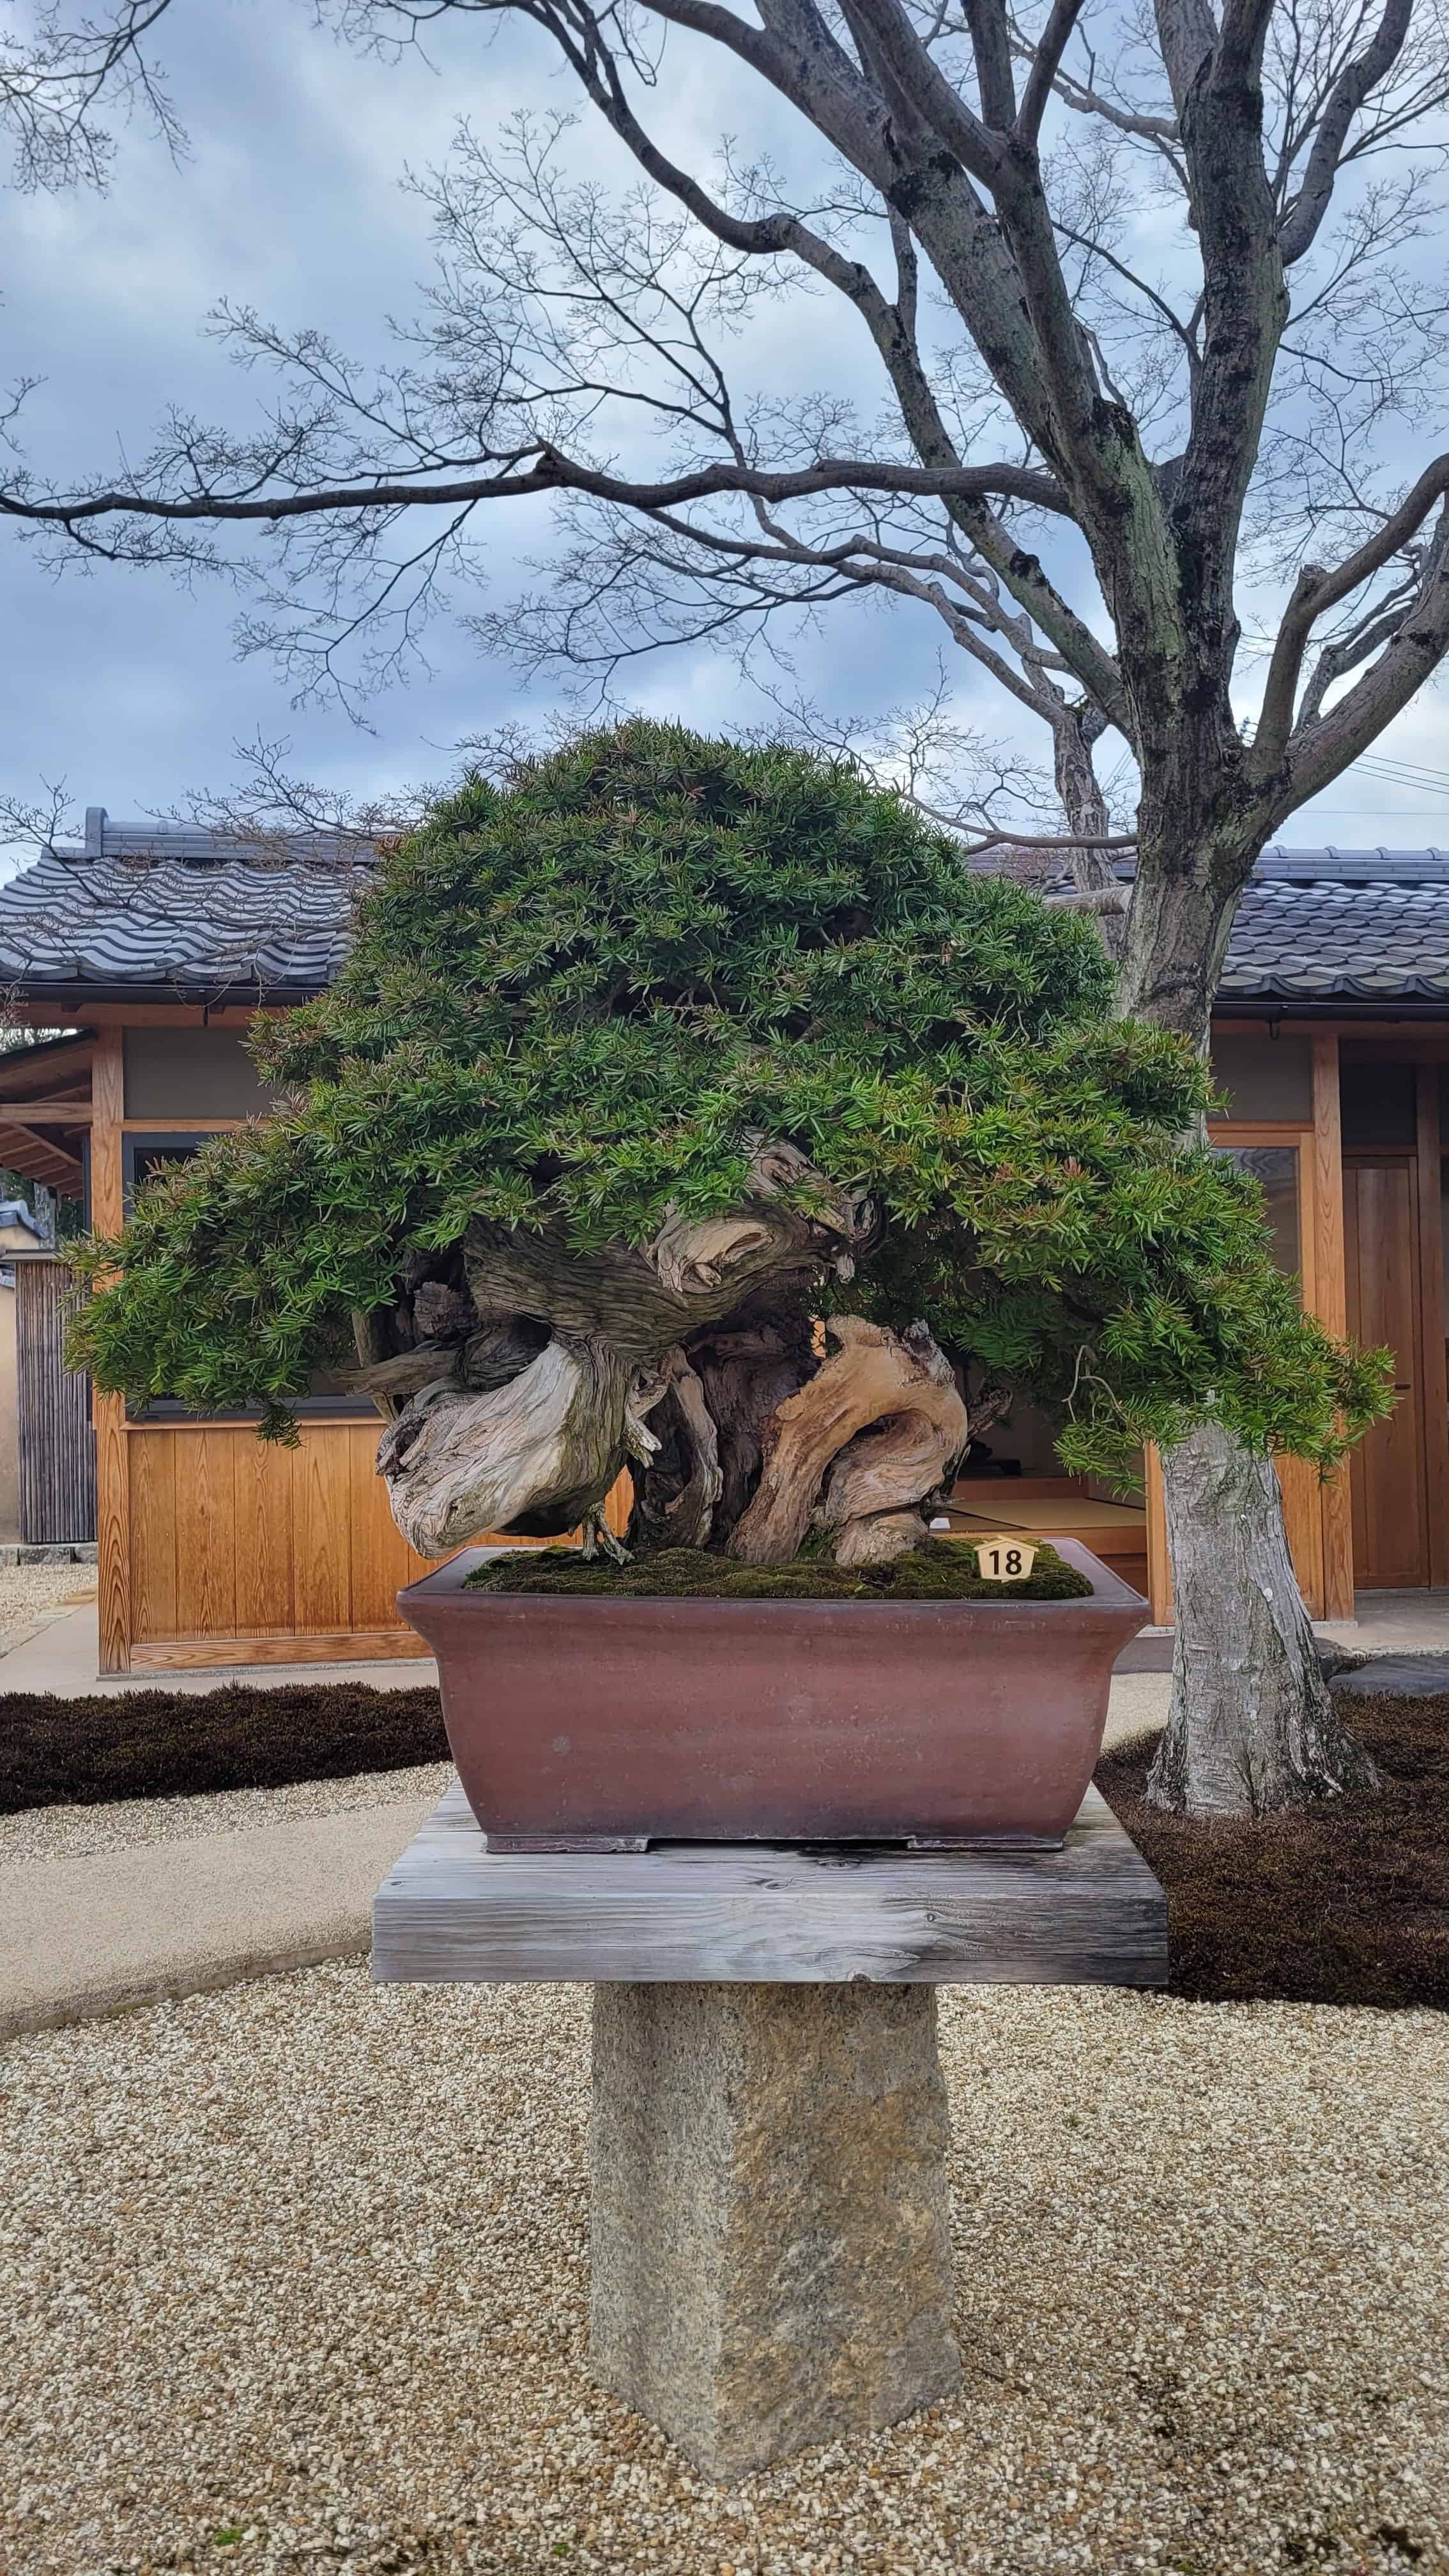 A juniper bonsai tree from kyoto in Japan